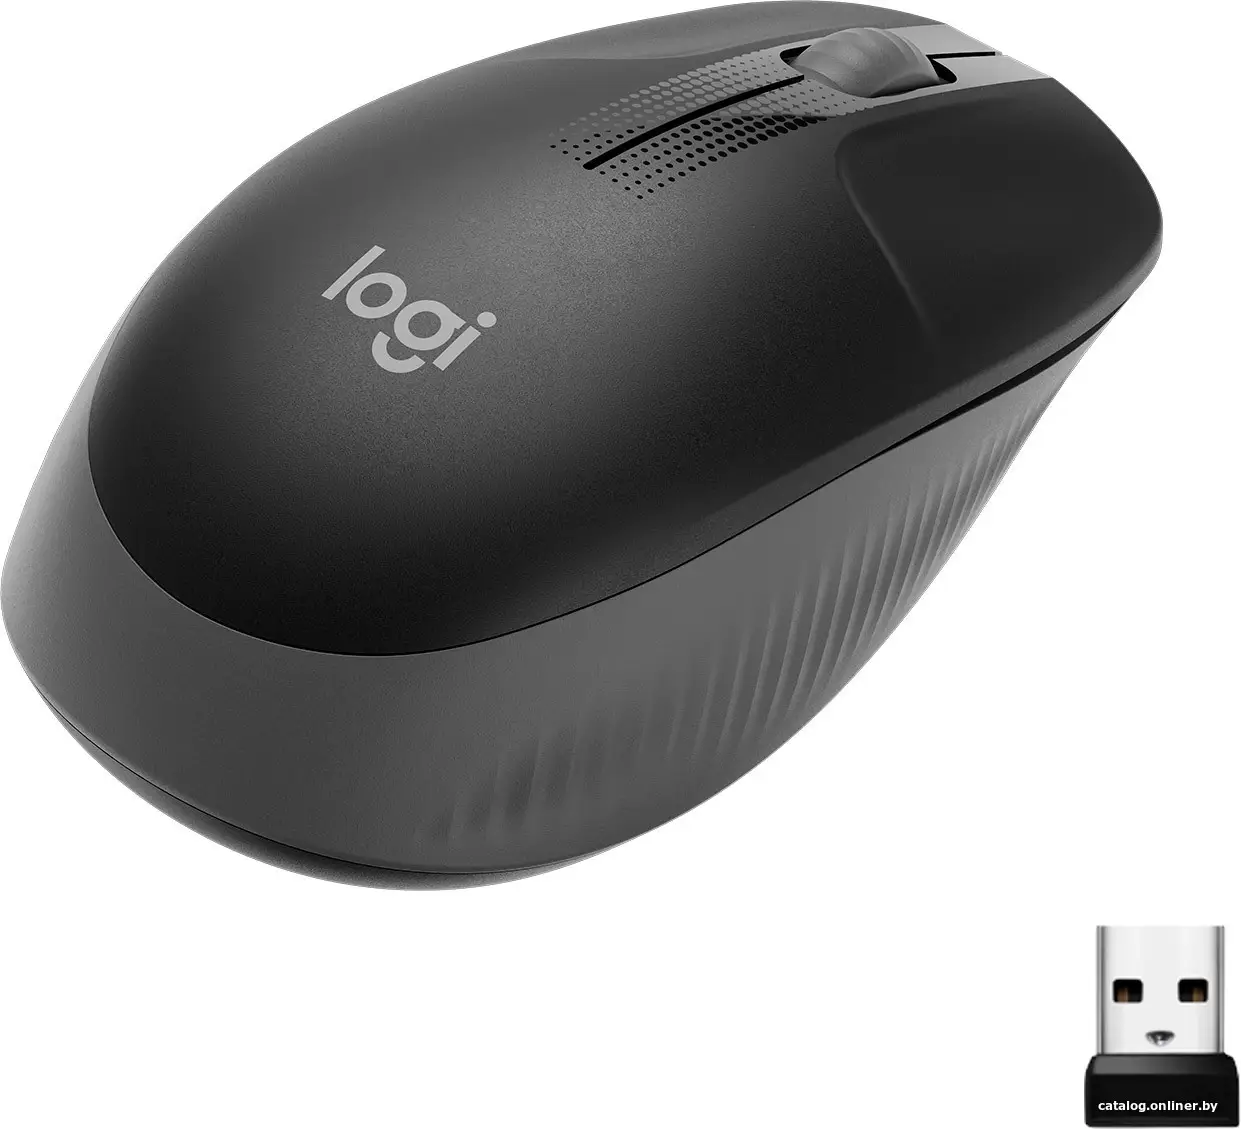 Купить Мышь Logitech M190 Full-size wireless mouse - CHARCOAL - 2.4GHZ - N/A - EMEA-808 - M190, цена, опт и розница